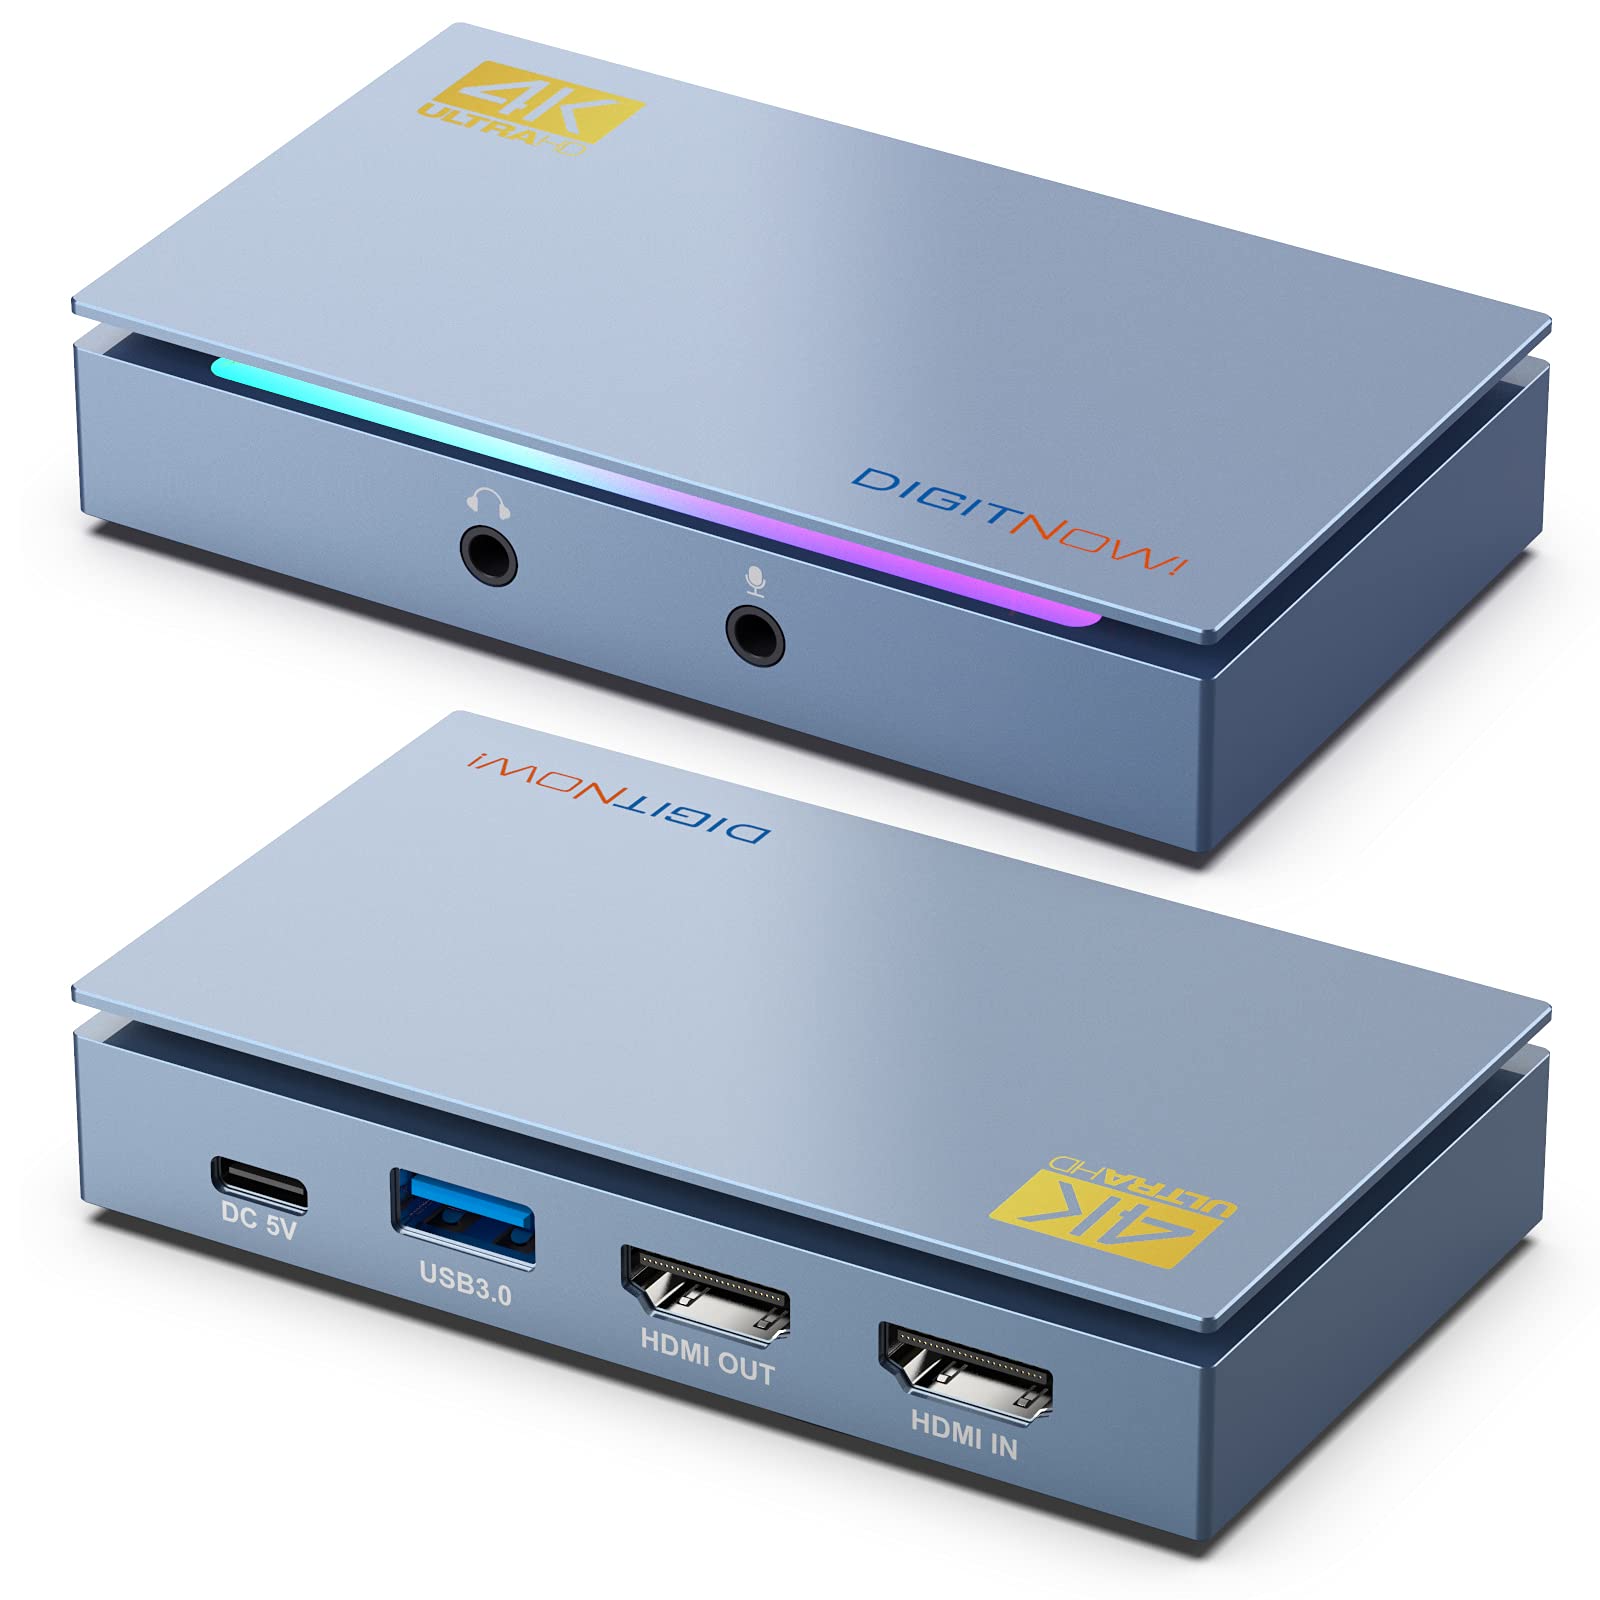 Cheap EZCAP327 HD USB3.0 SDI Game Video Capture Card 4K 30fps